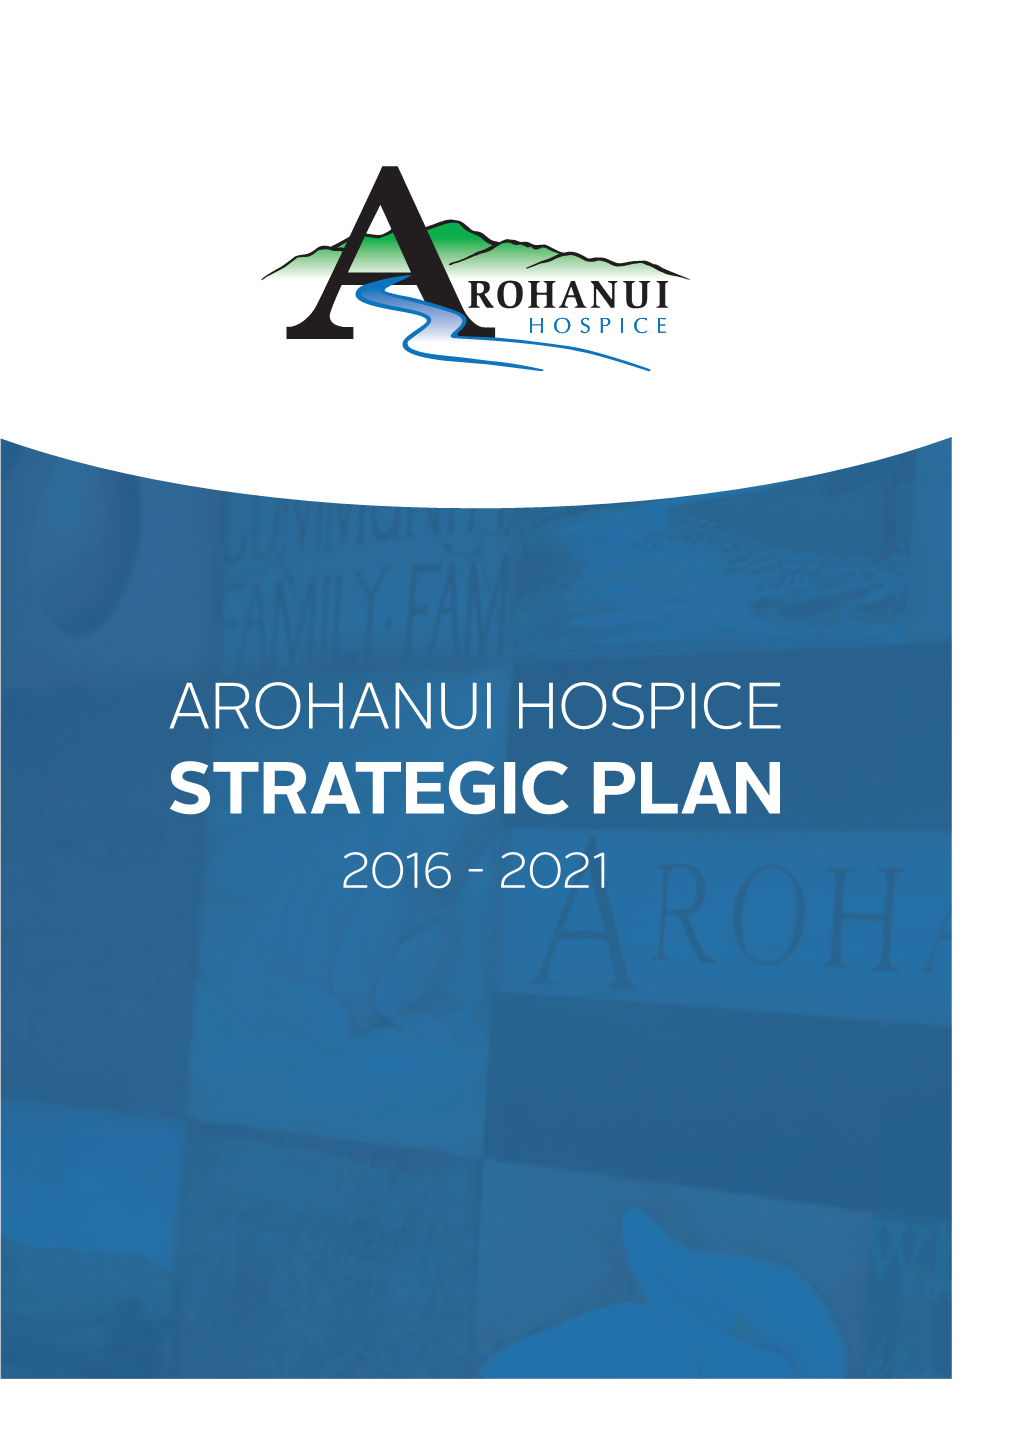 Arohanui Hospice Strategic Plan 2016 - 2021